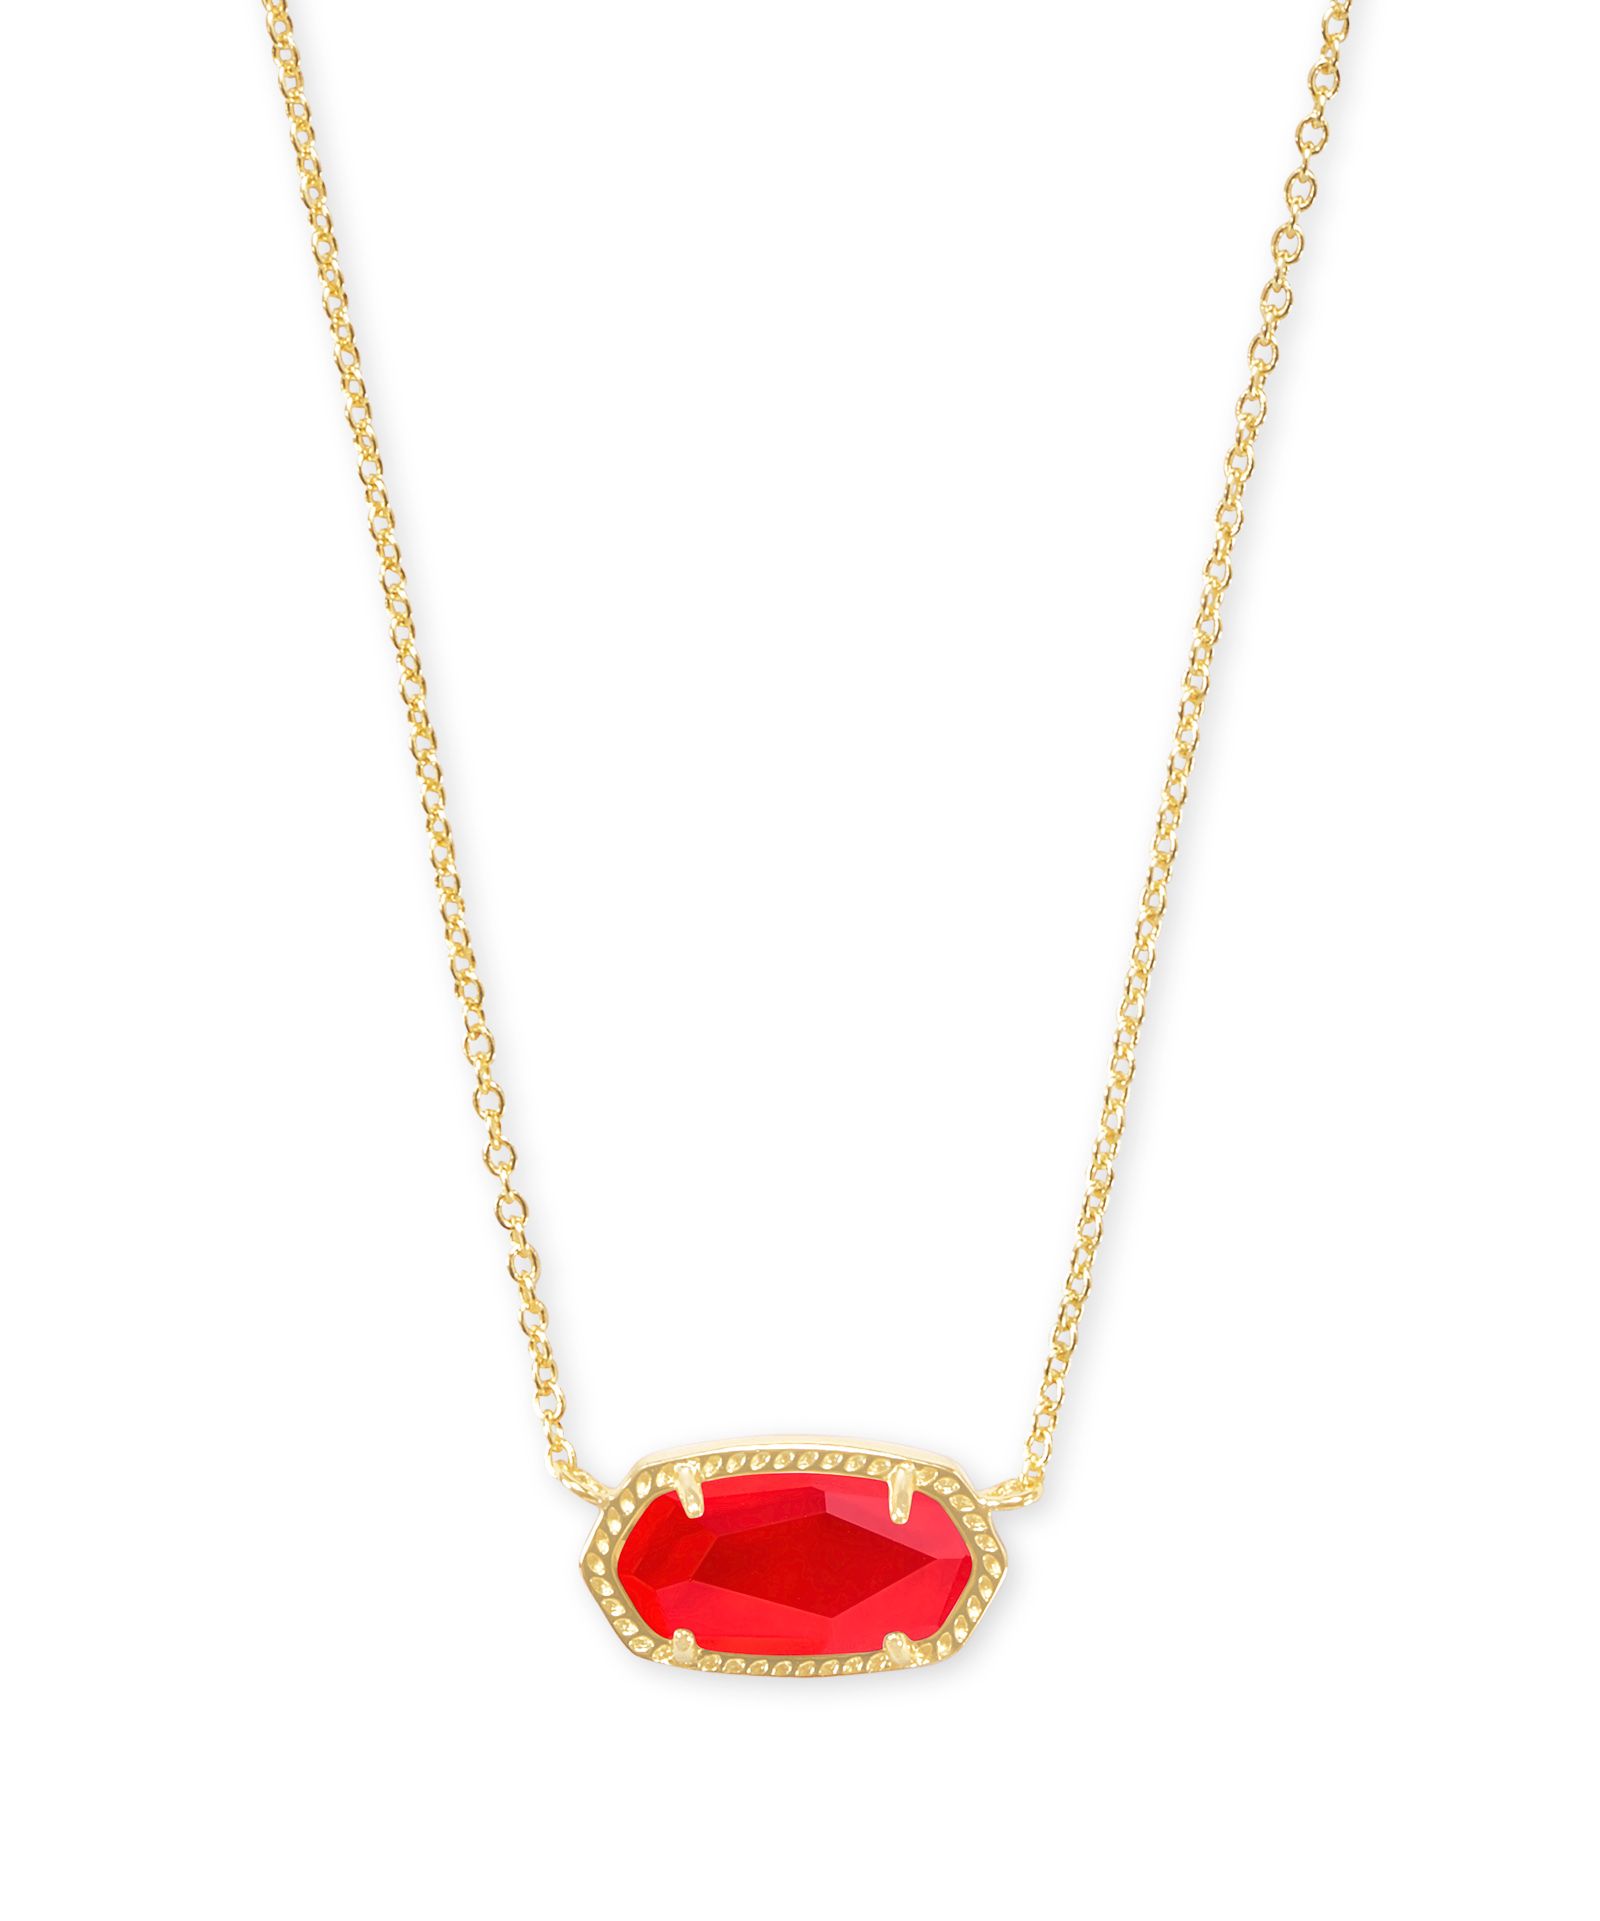 Elisa Gold Pendant Necklace in Red Illusion | Kendra Scott | Kendra Scott